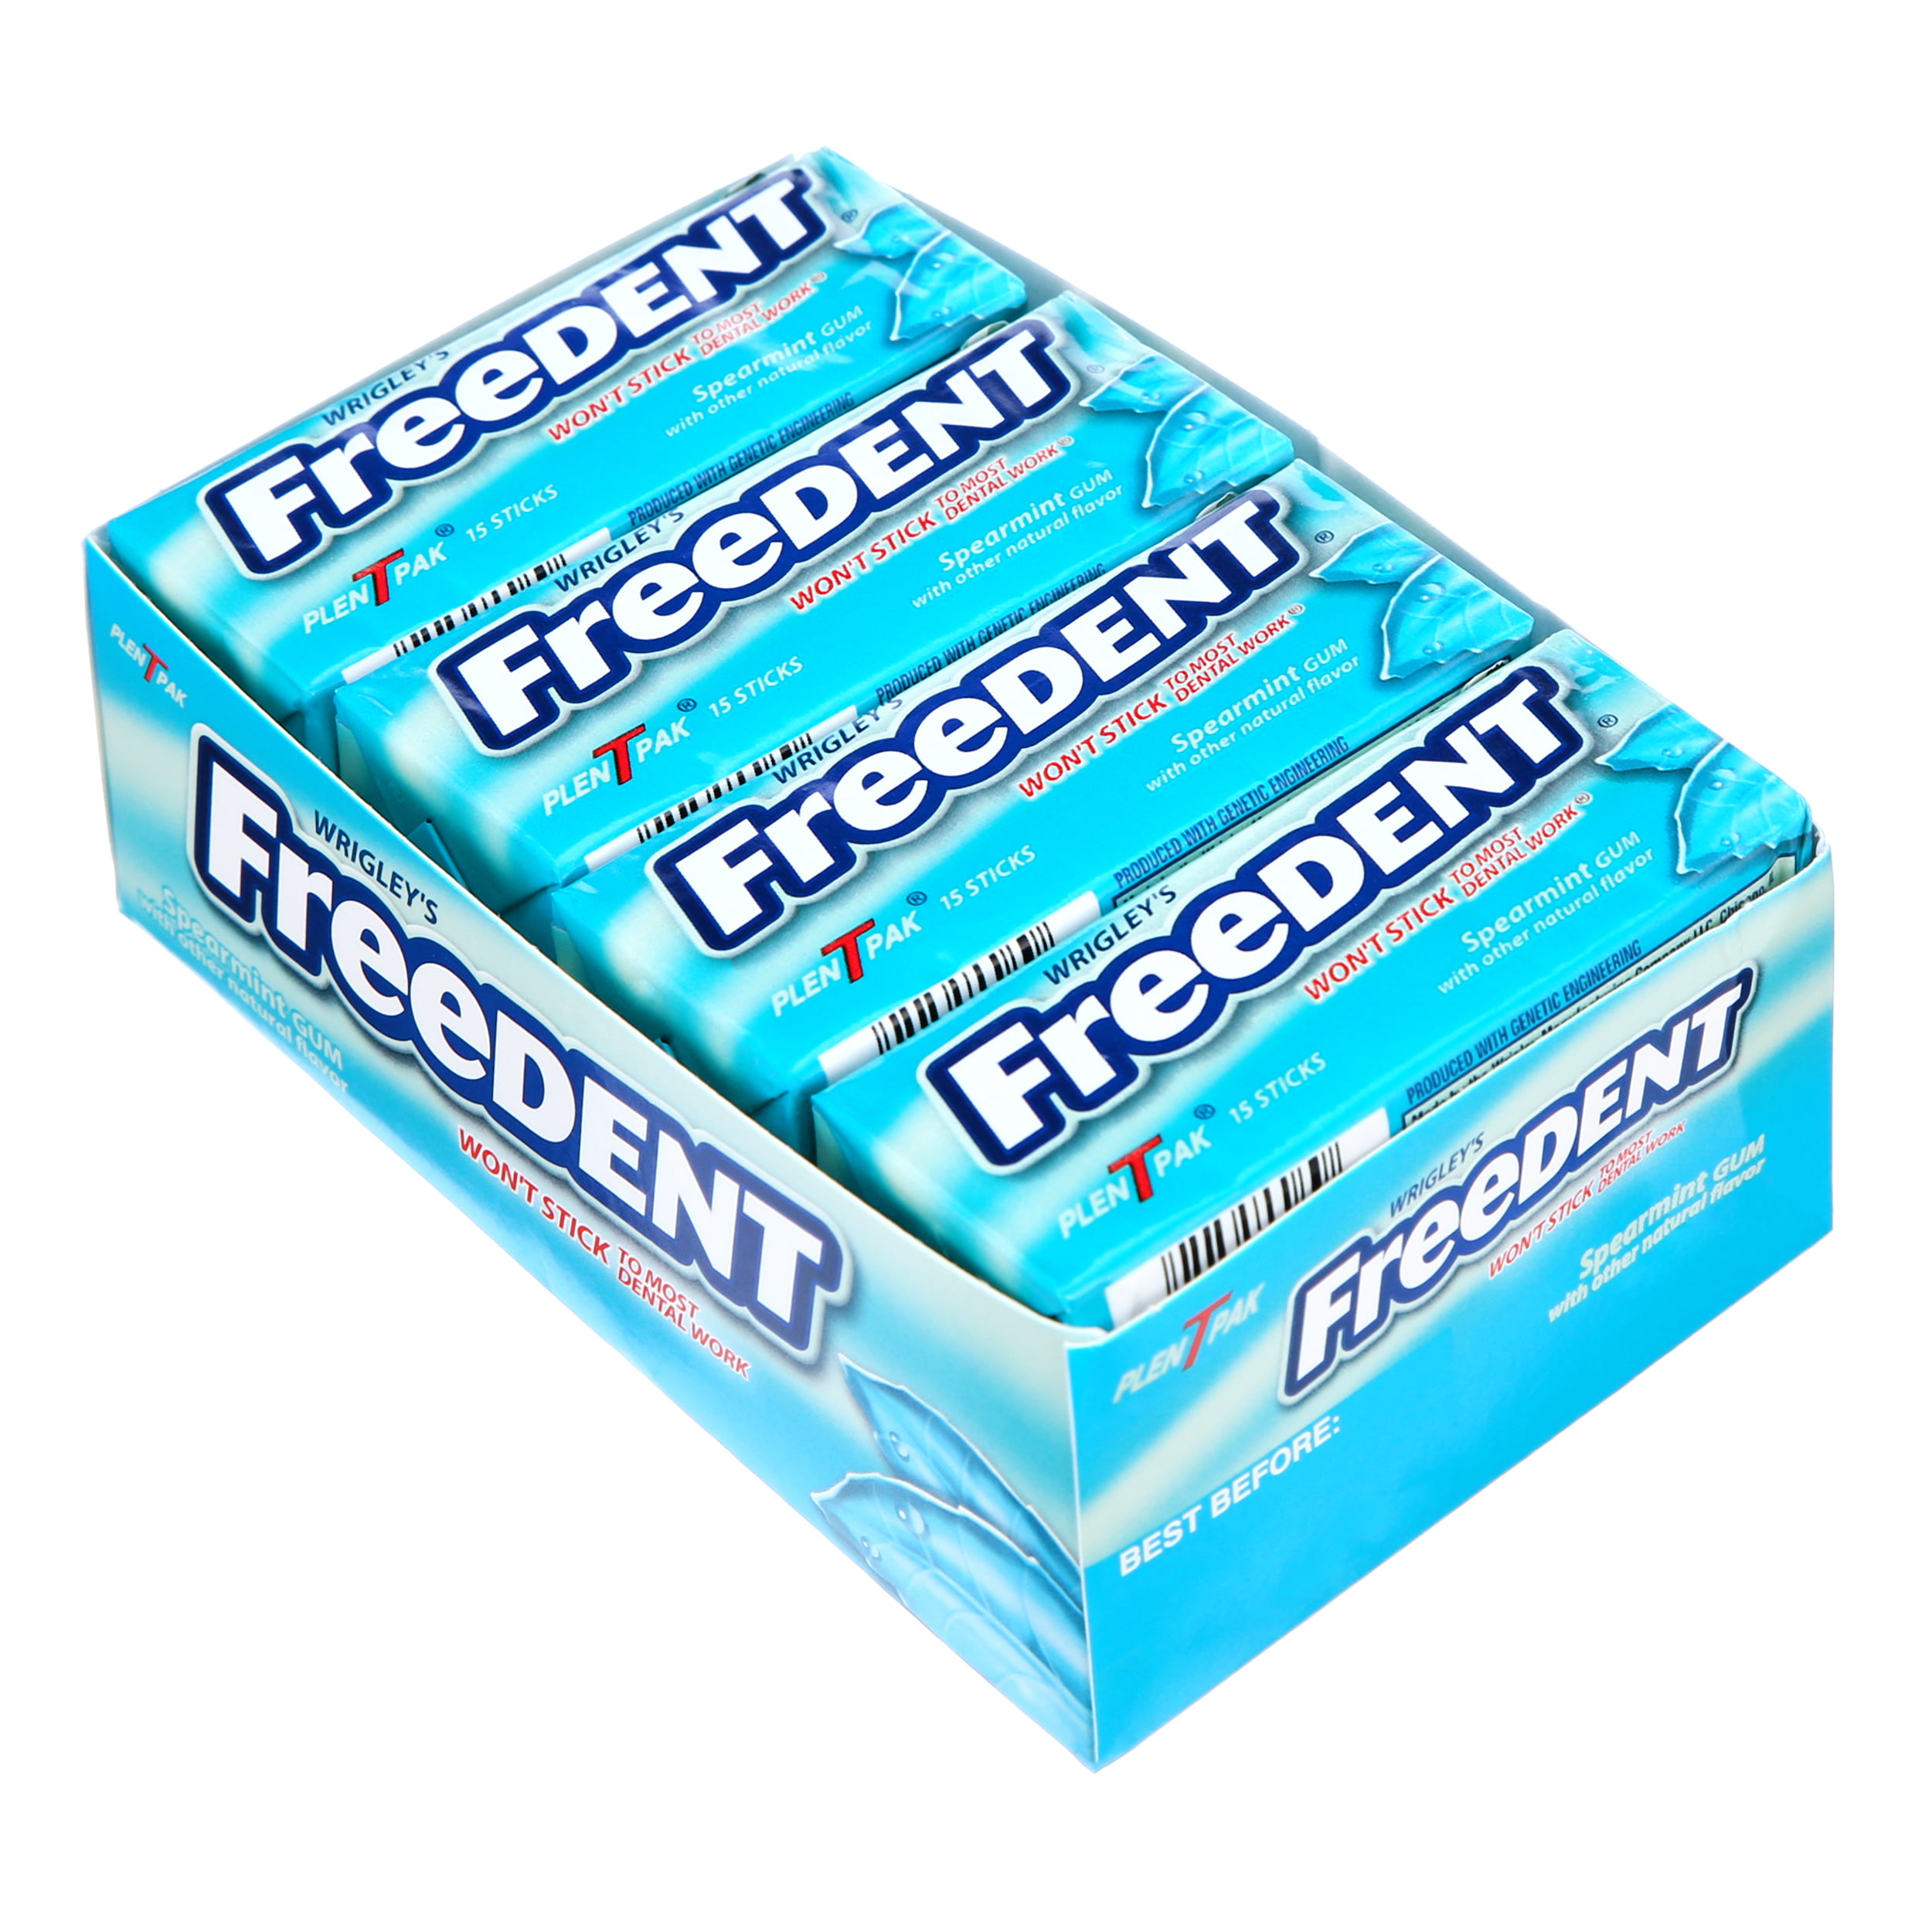 Verslagen Bedachtzaam barst Wrigley's Freedent Gum, Spearmint, 15 Sticks (Pack of 8) - Walmart.com